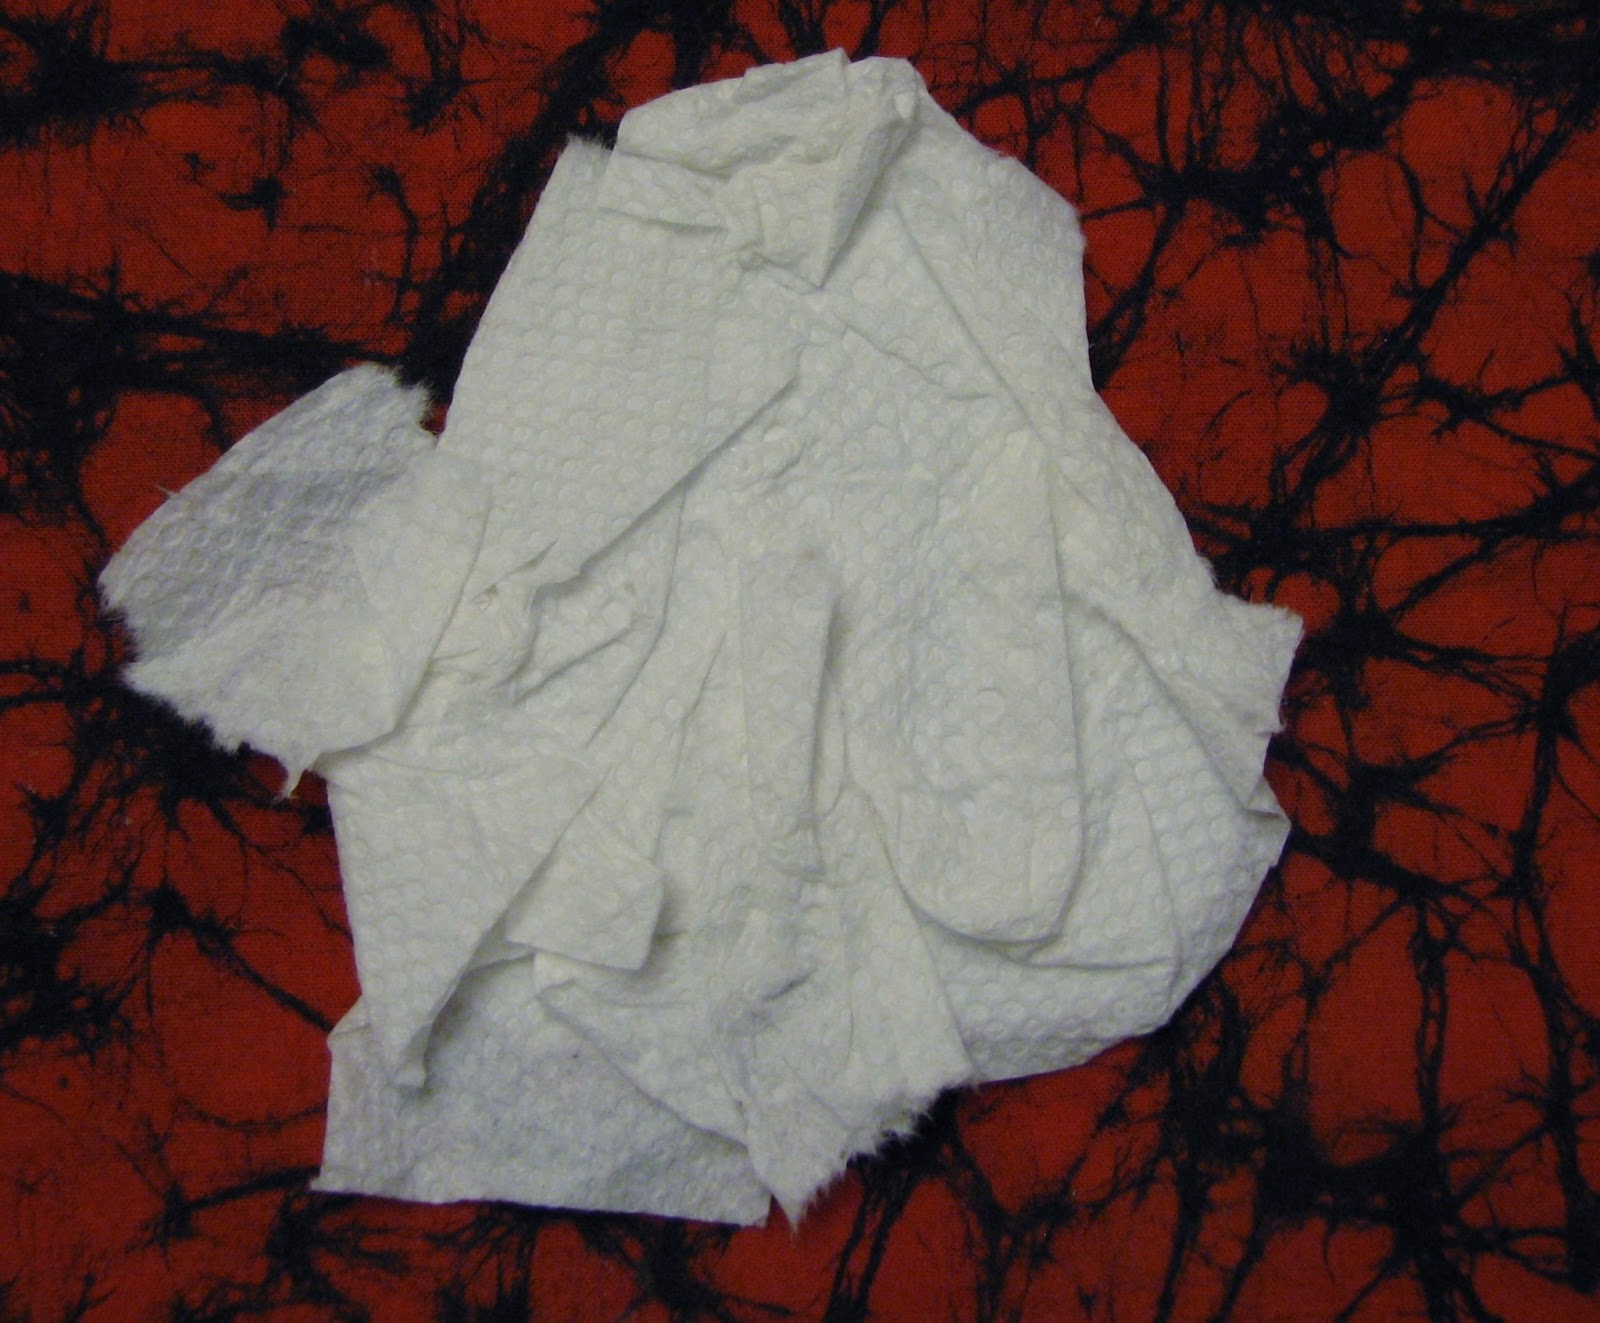 POTIONSMITH: Toilet Paper Roll Mummy